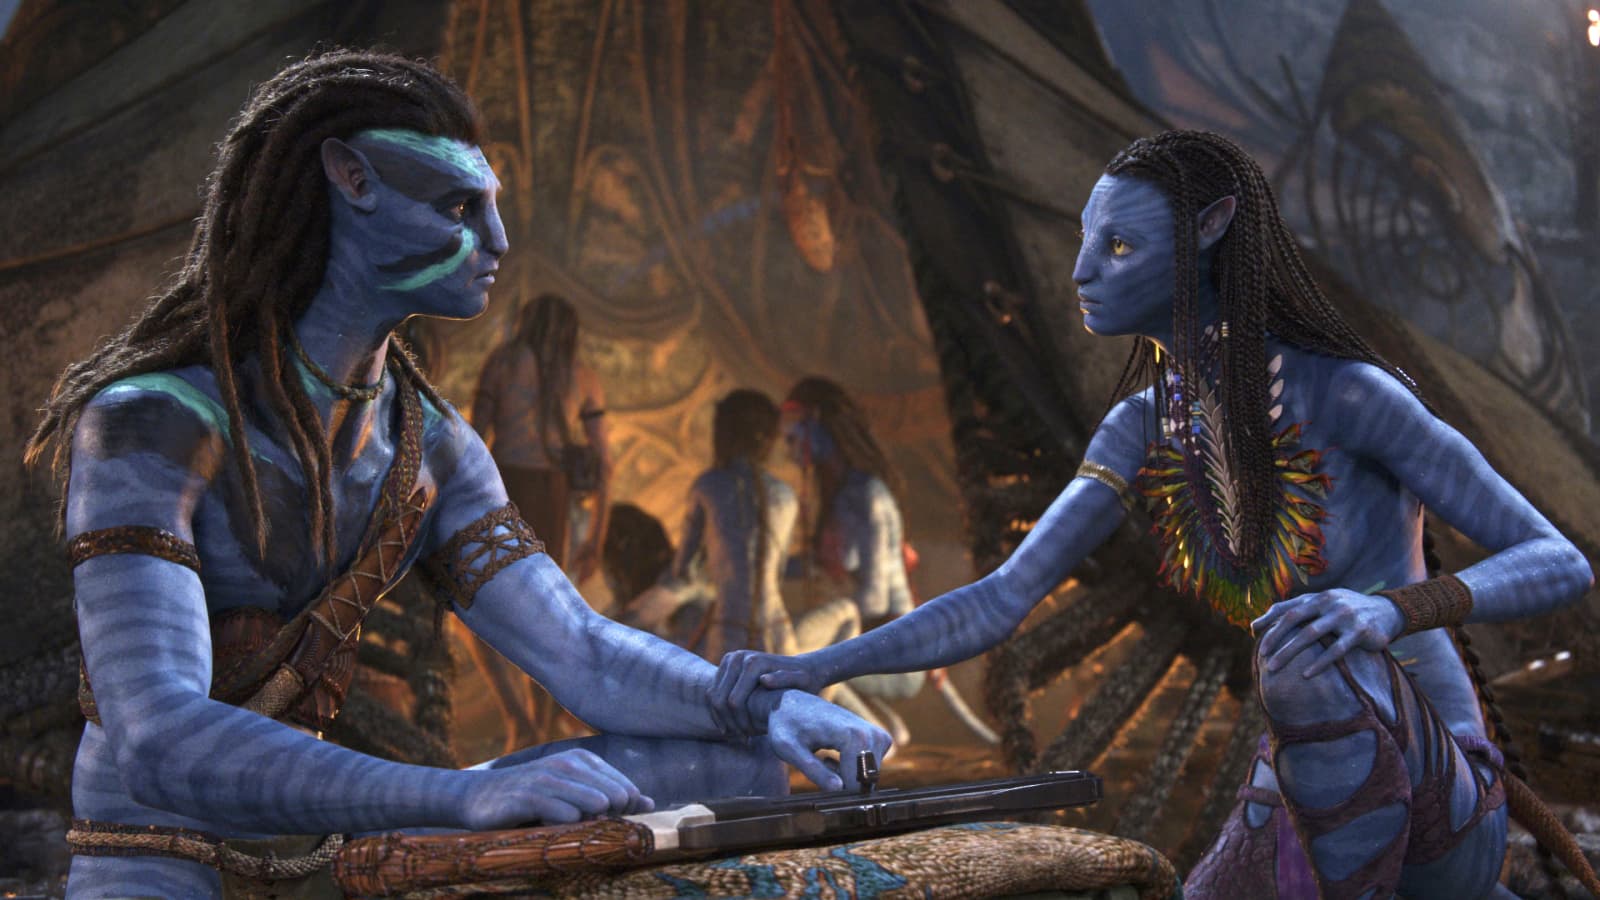 James Cameron's Latest Avatar Saga Will It Shape or Shake Up Future Sci-Fi Films